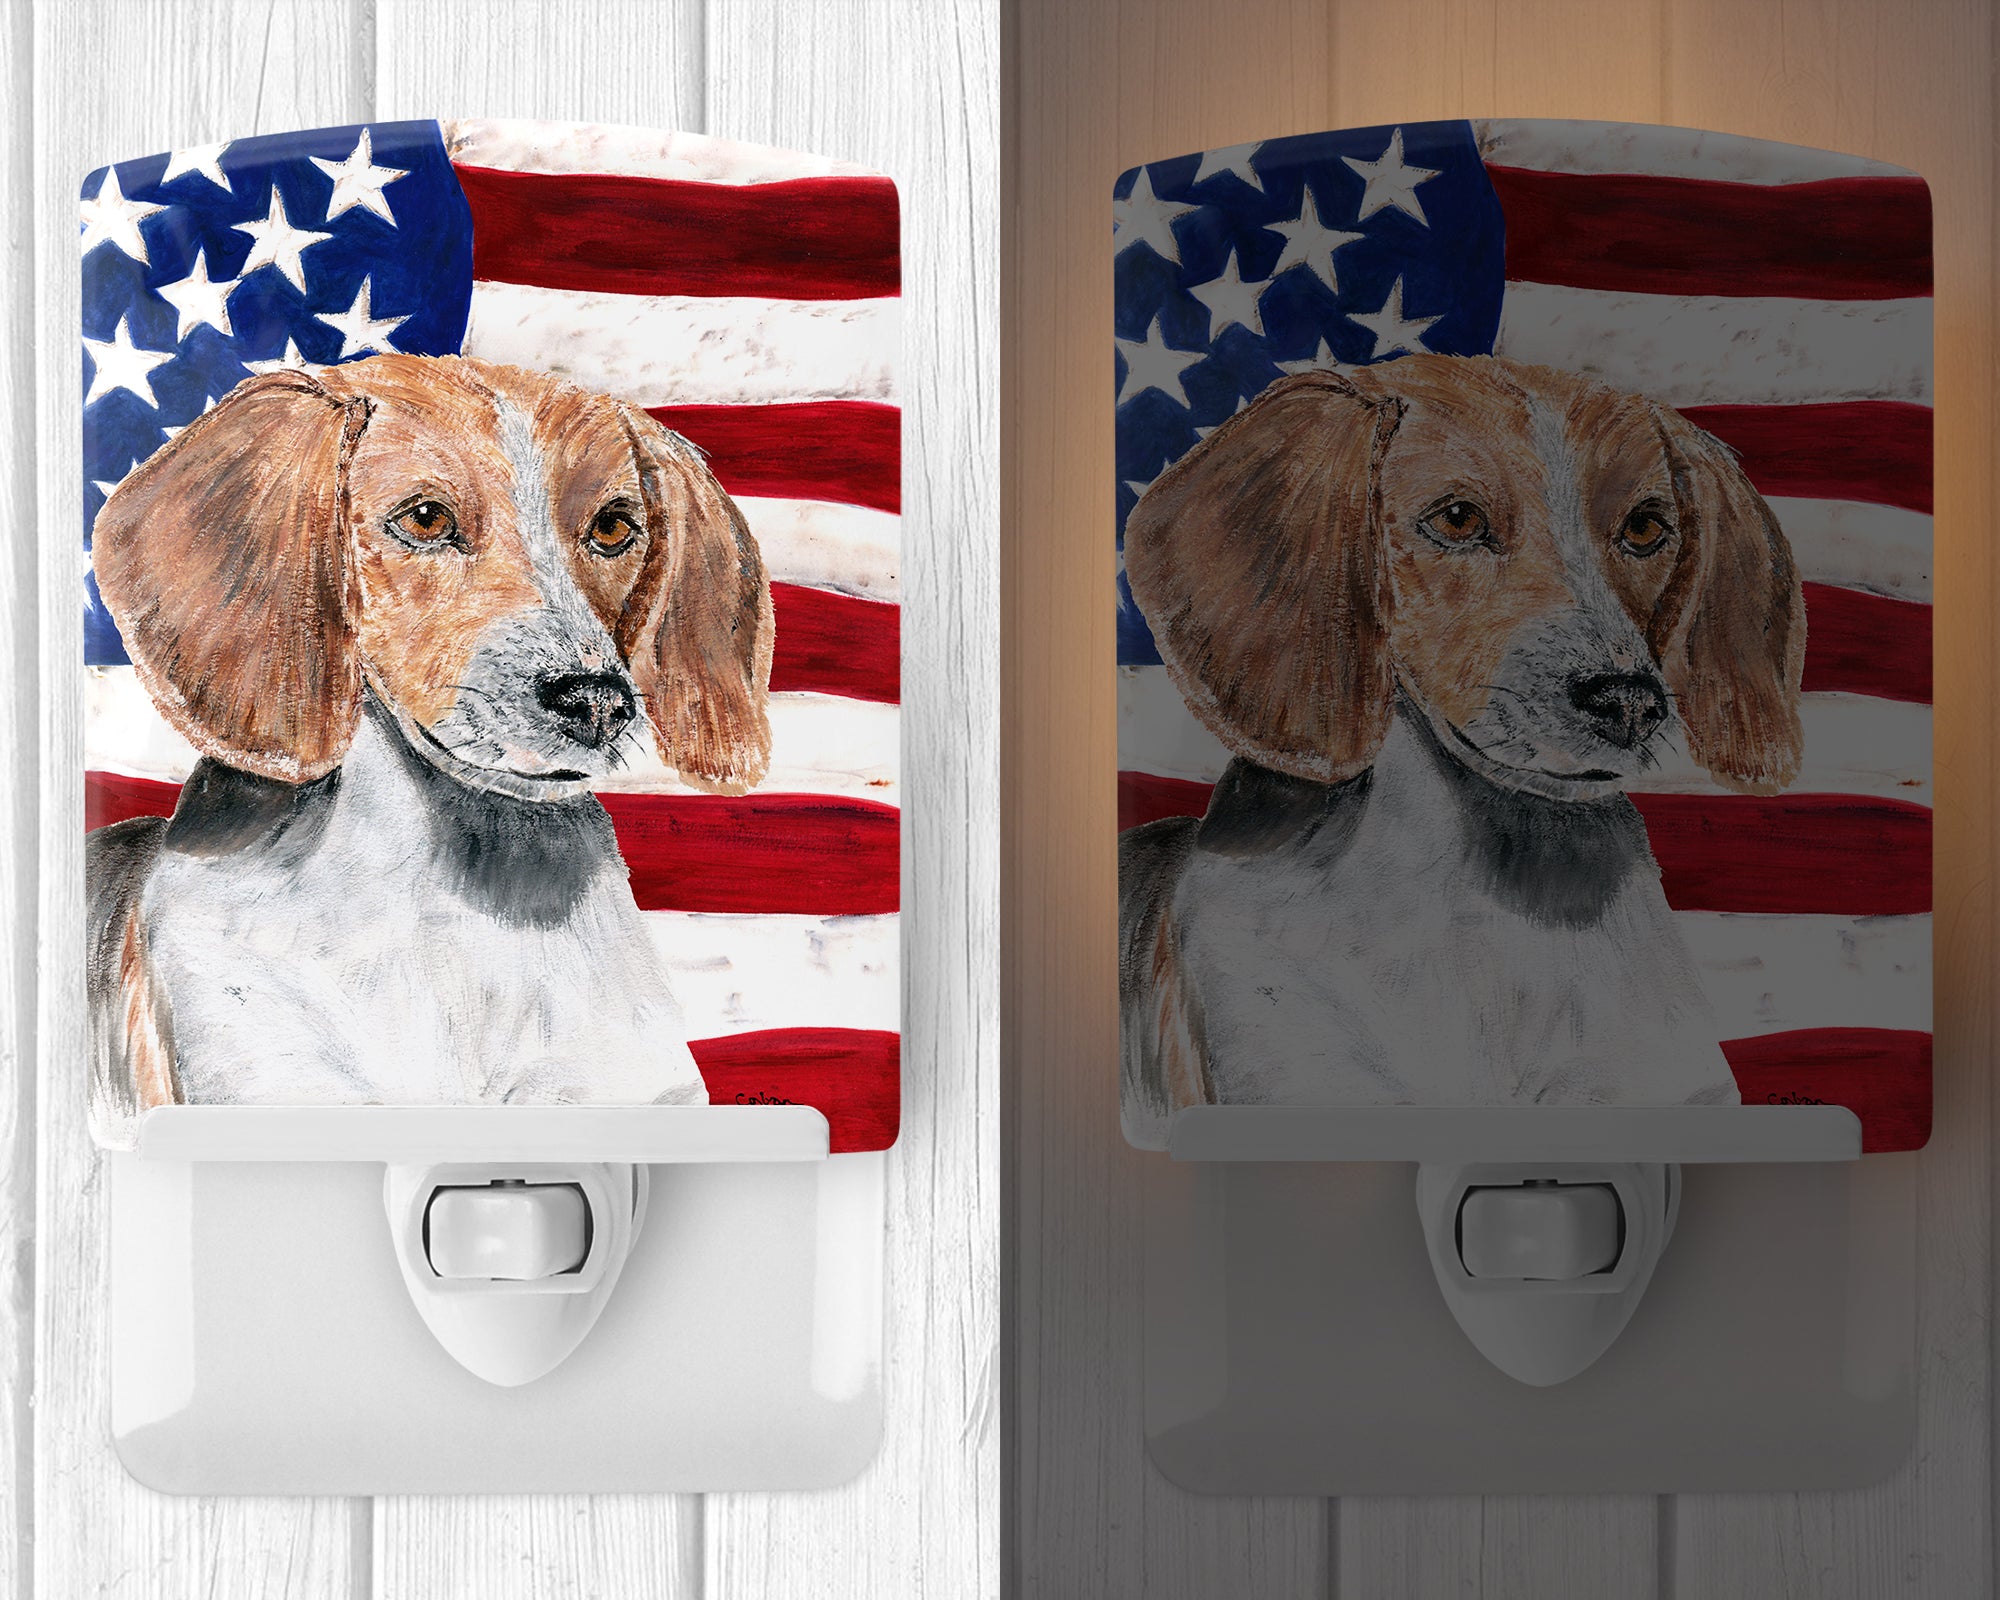 English Foxhound with American Flag Ceramic Night Light SC9523CNL - the-store.com